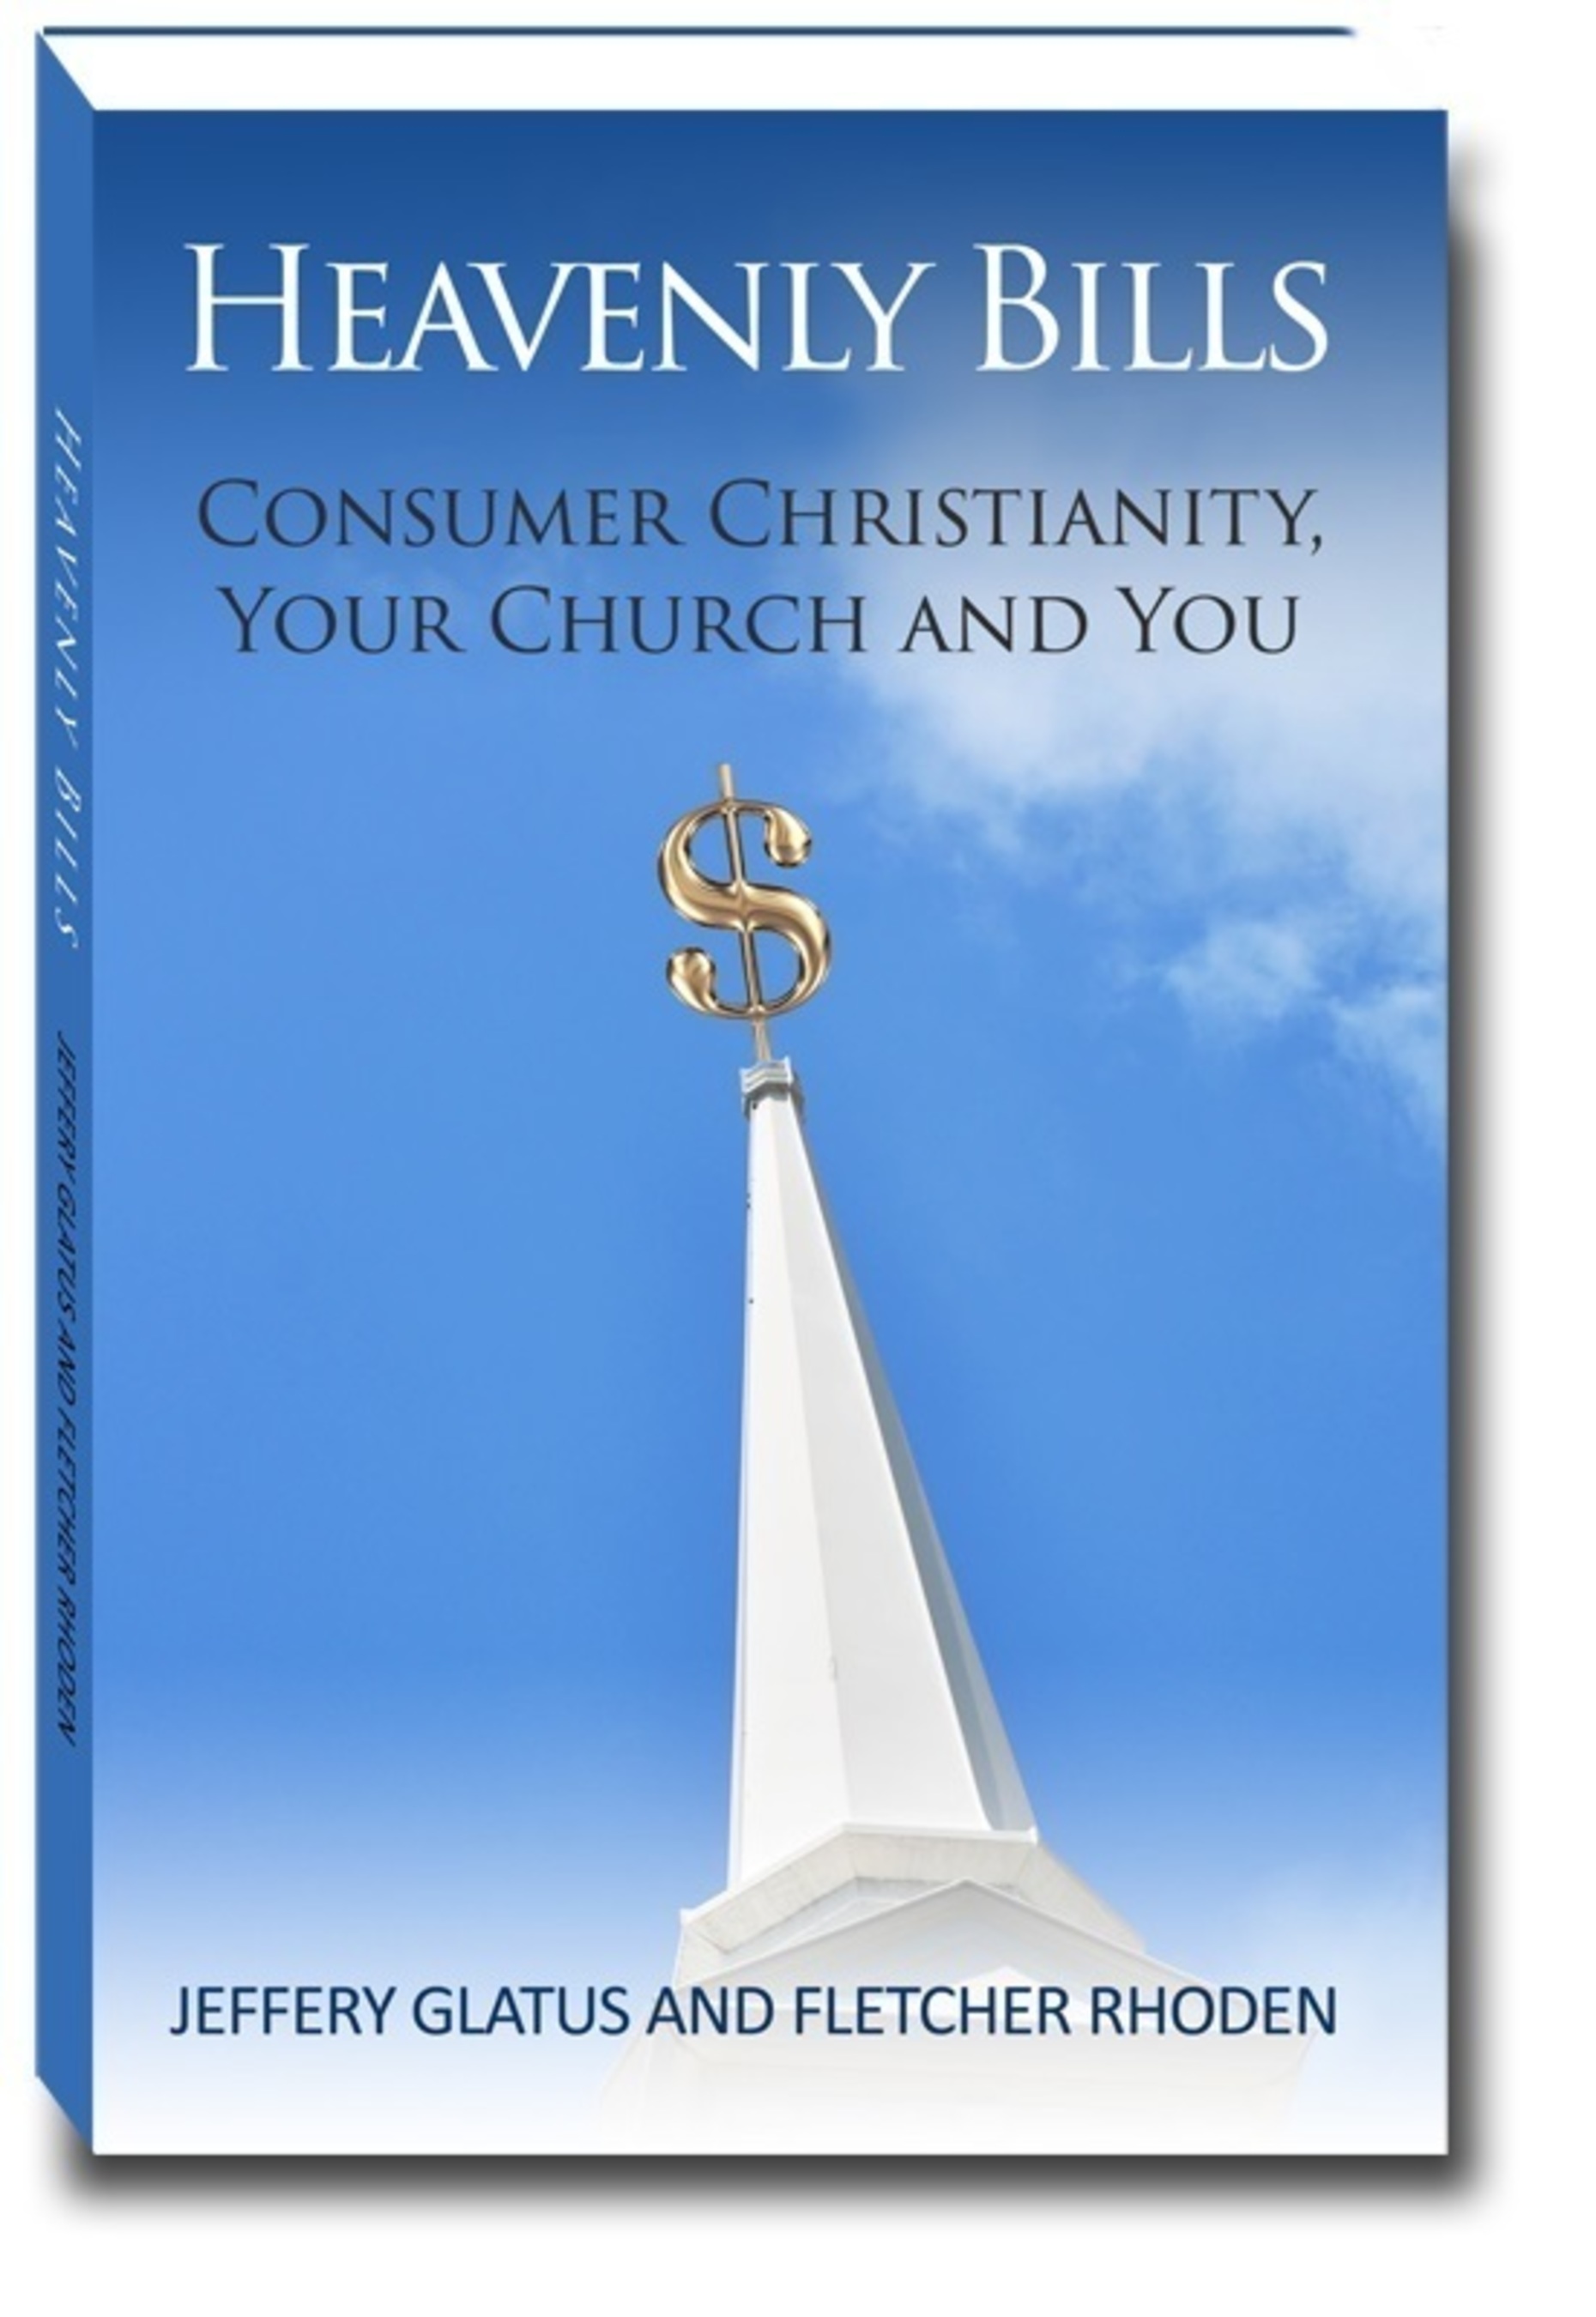 Heavenly Bills: Consumer Christianity, Your Church and You - book cover (PRNewsFoto/Jeffery Glatus, Fletcher Roden)